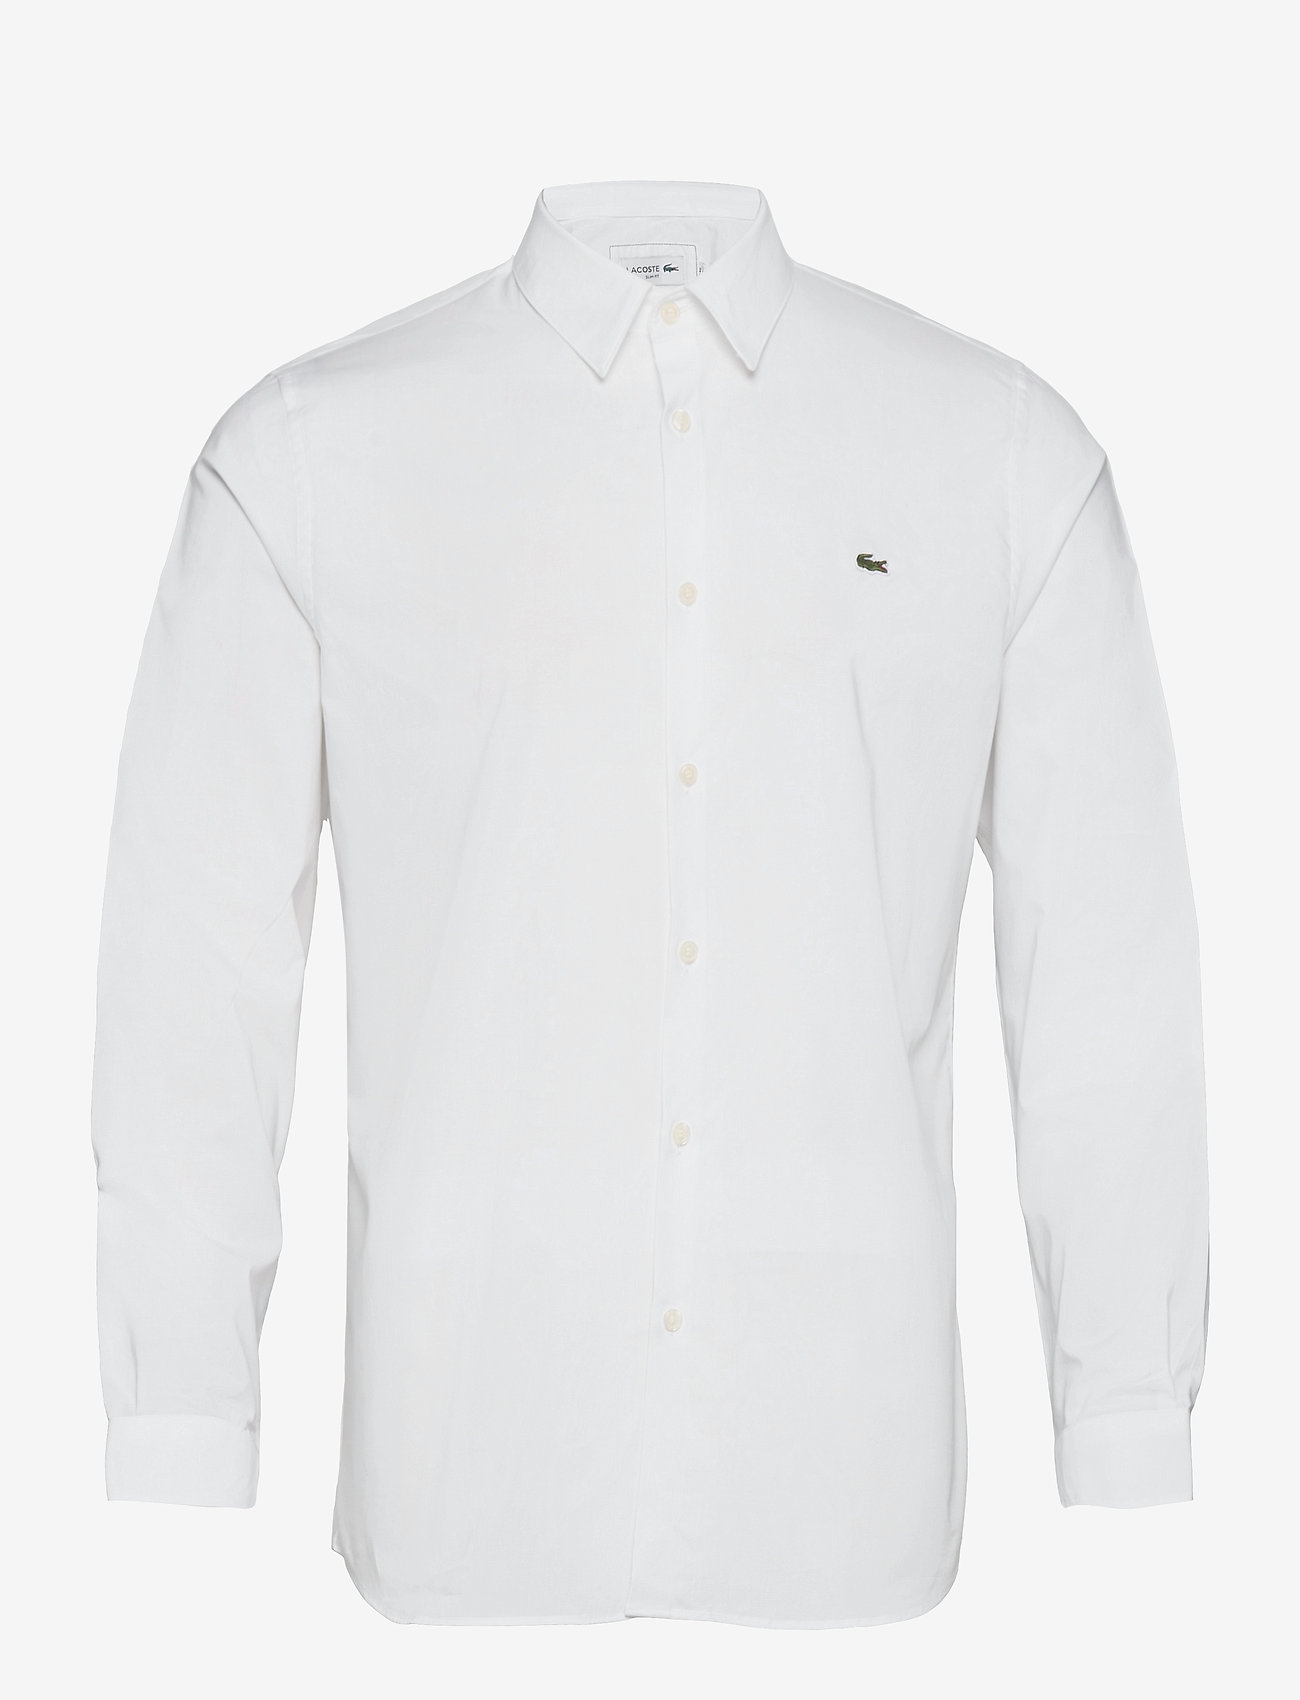 Men S L/s Woven Shirt (White) (100 